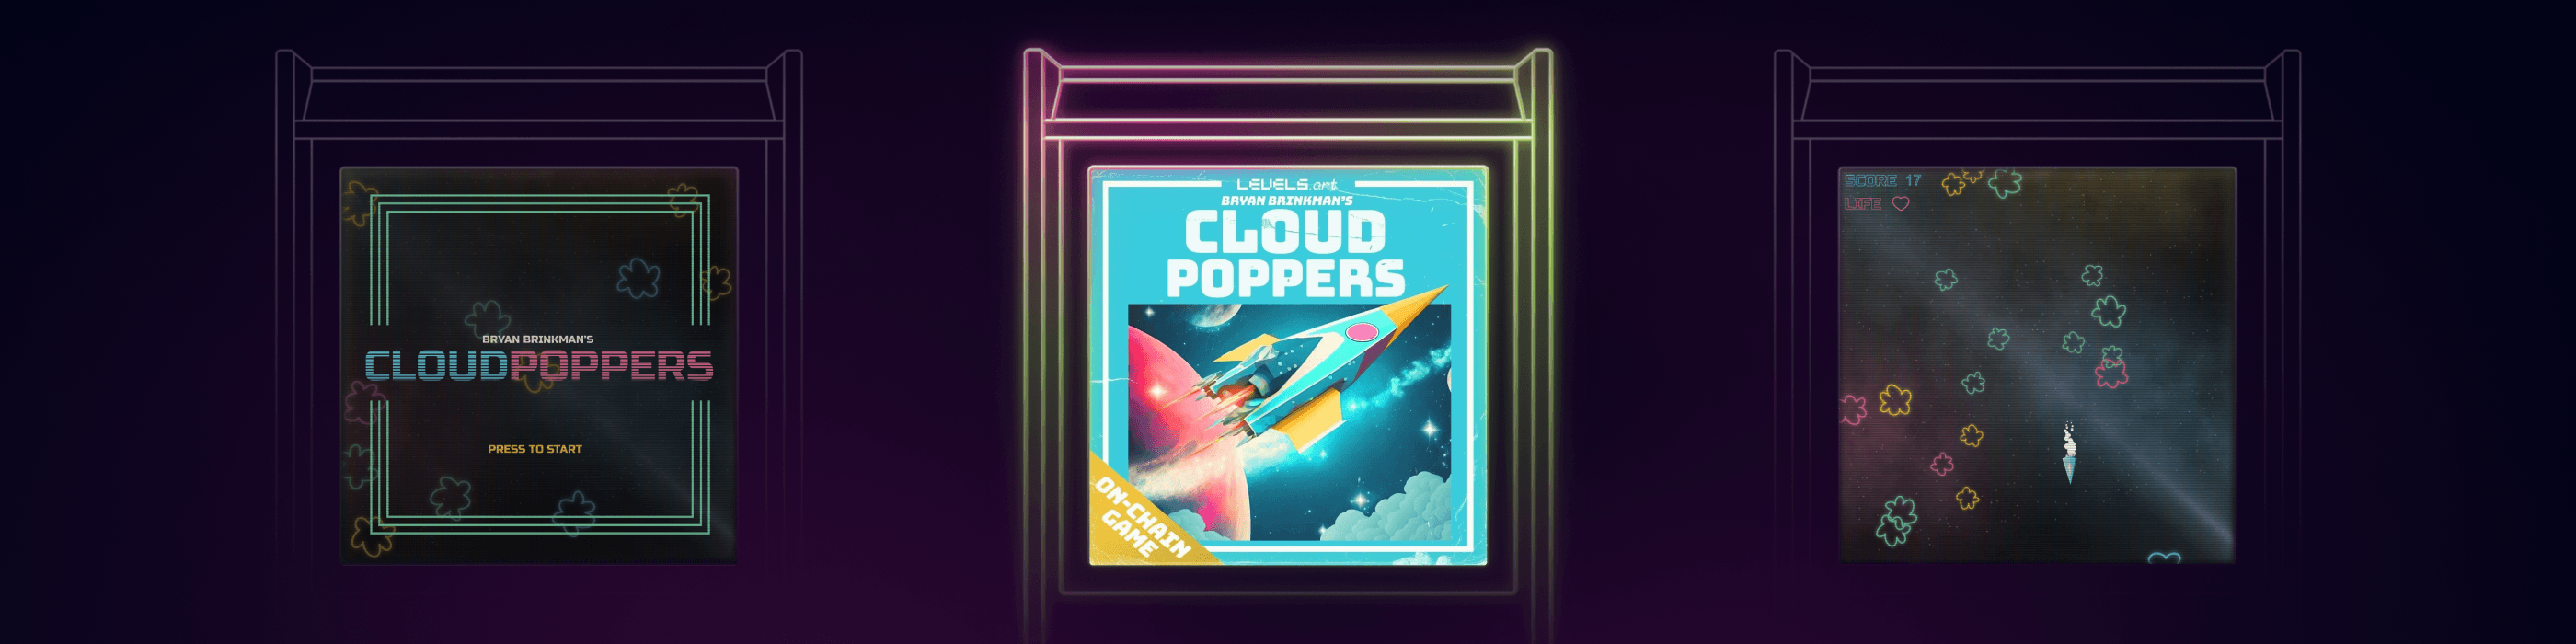 Cloud Poppers by Bryan Brinkman